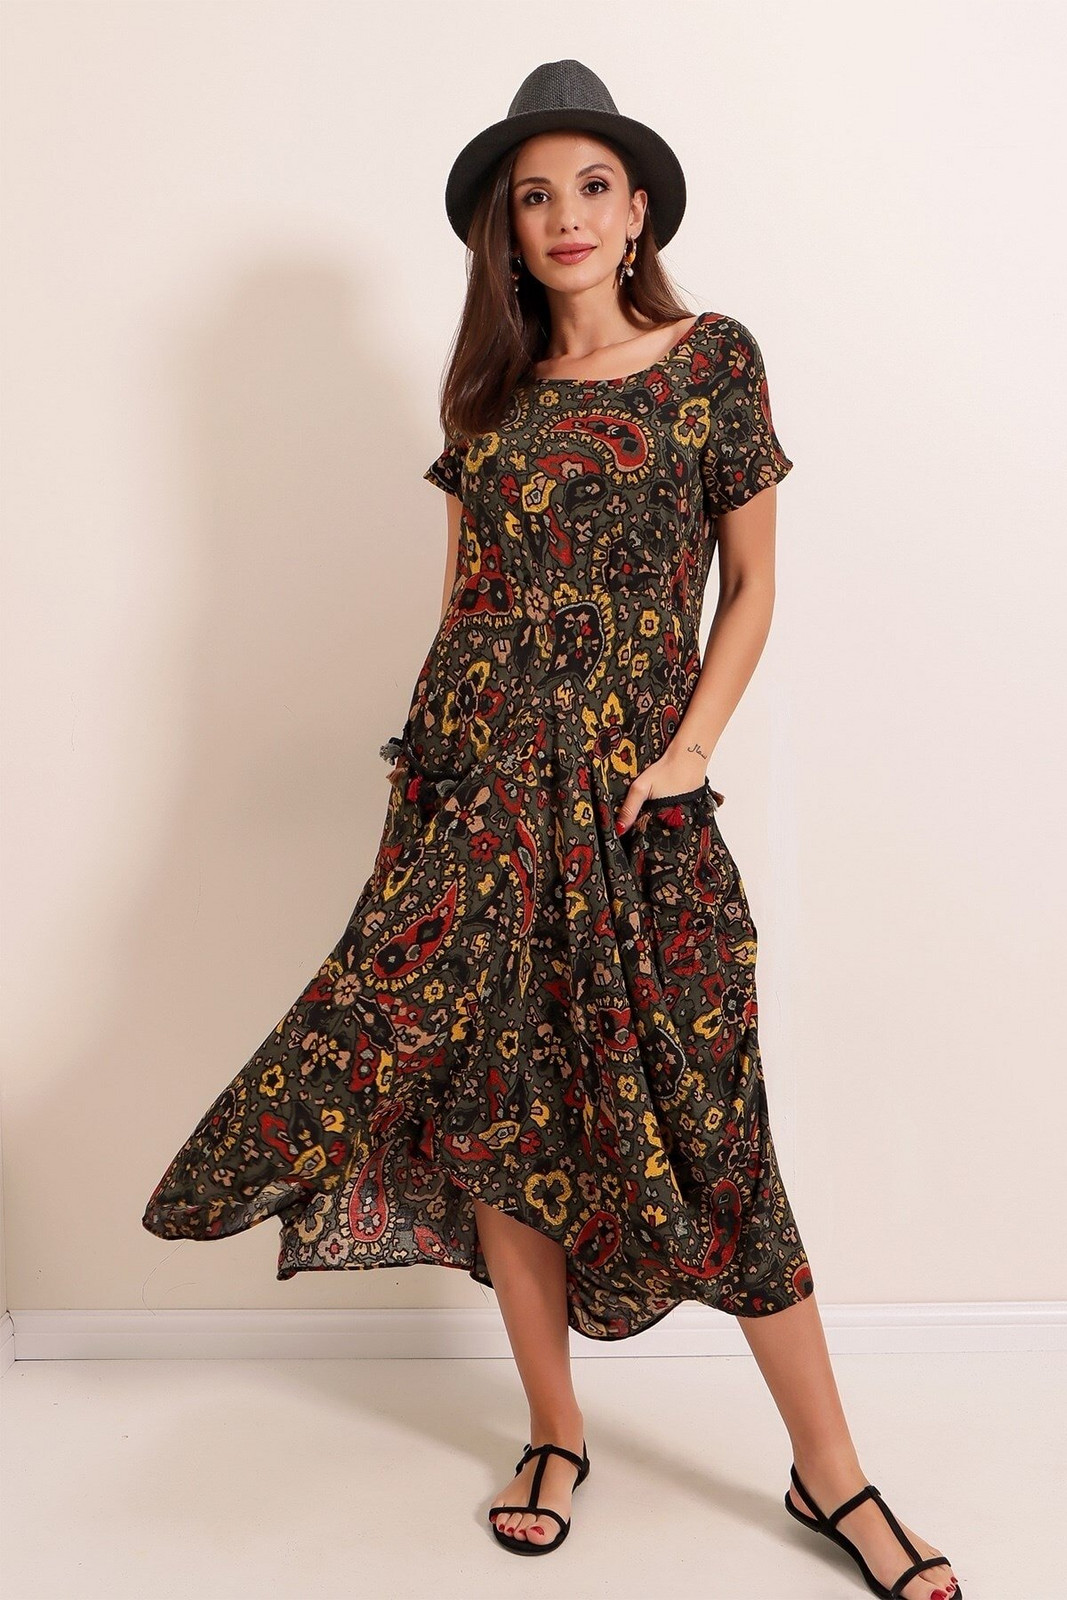 By Saygı Floral Pattern Tasseled Double Pocketed Asymmetric Dress Khaki